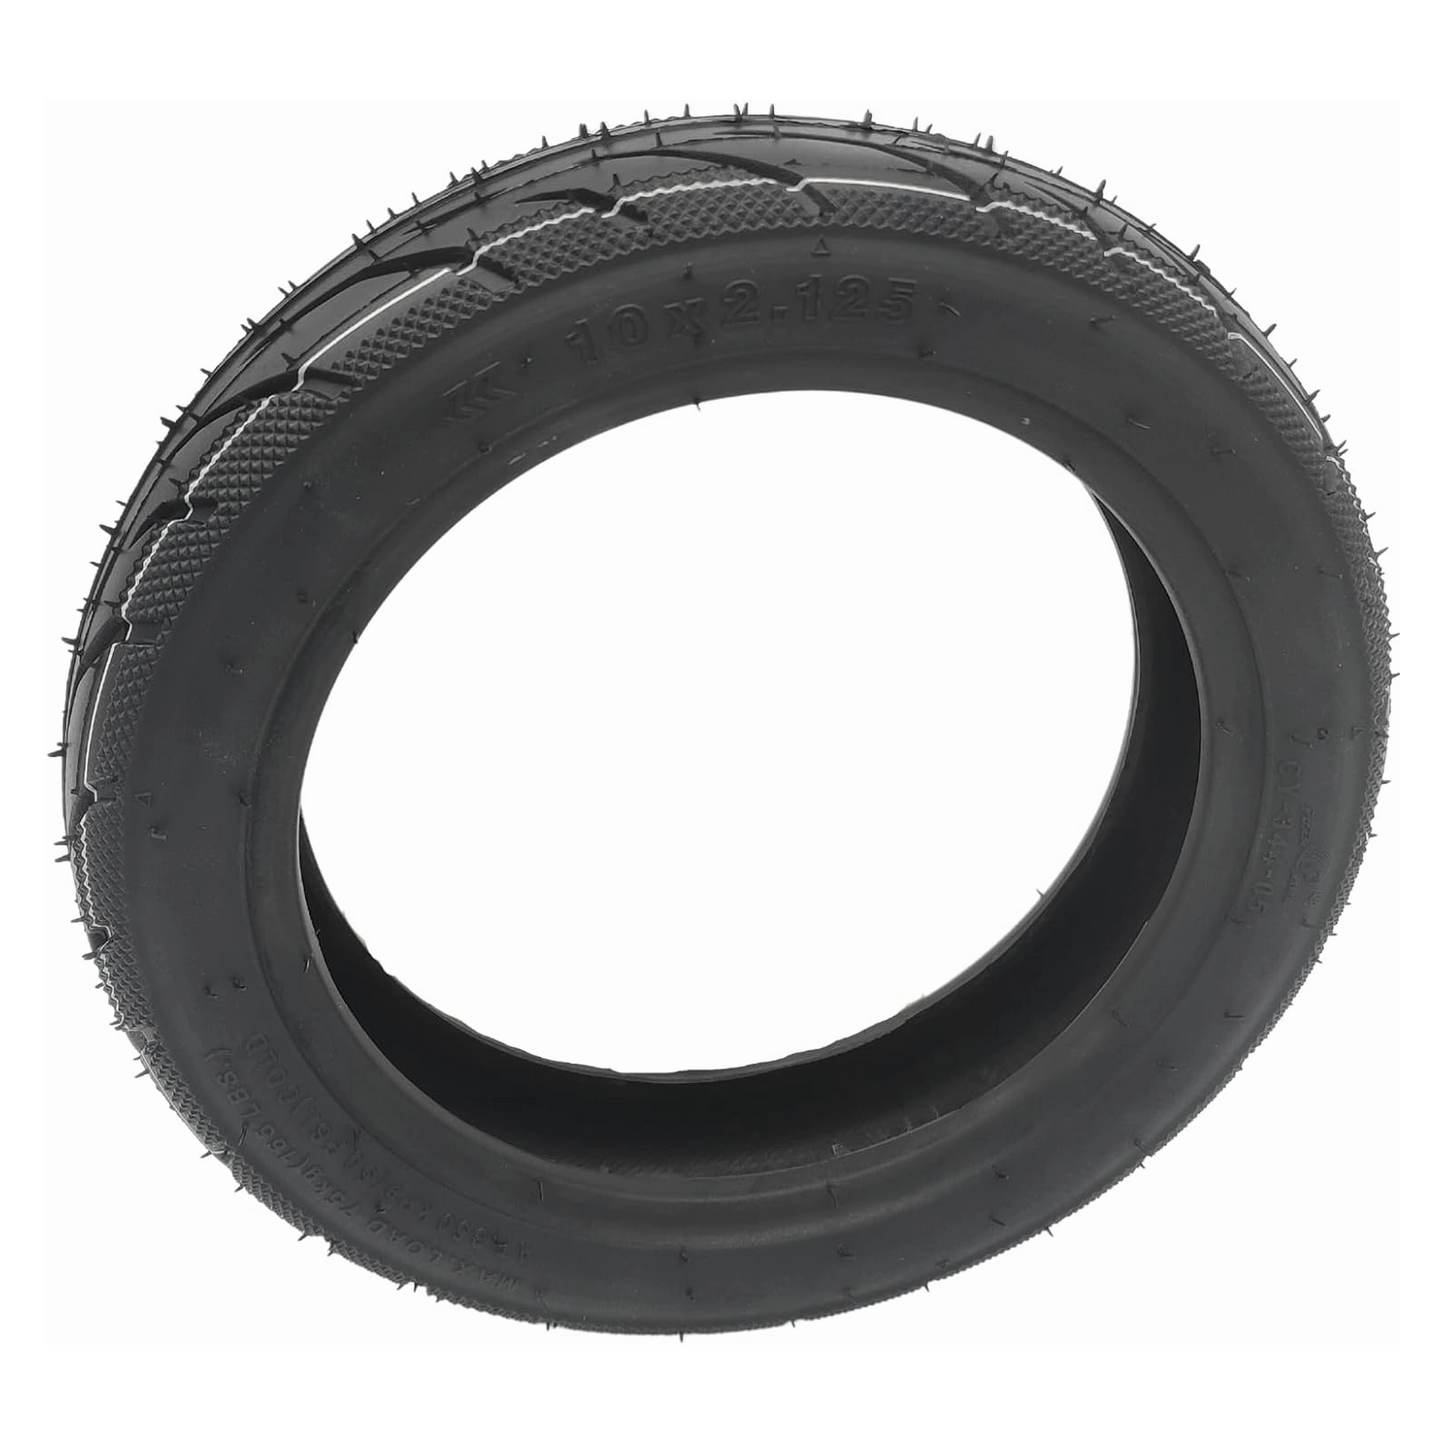 Neumáticos Ninebot Segway F65 10x2.125 - 6,5 pulgadas